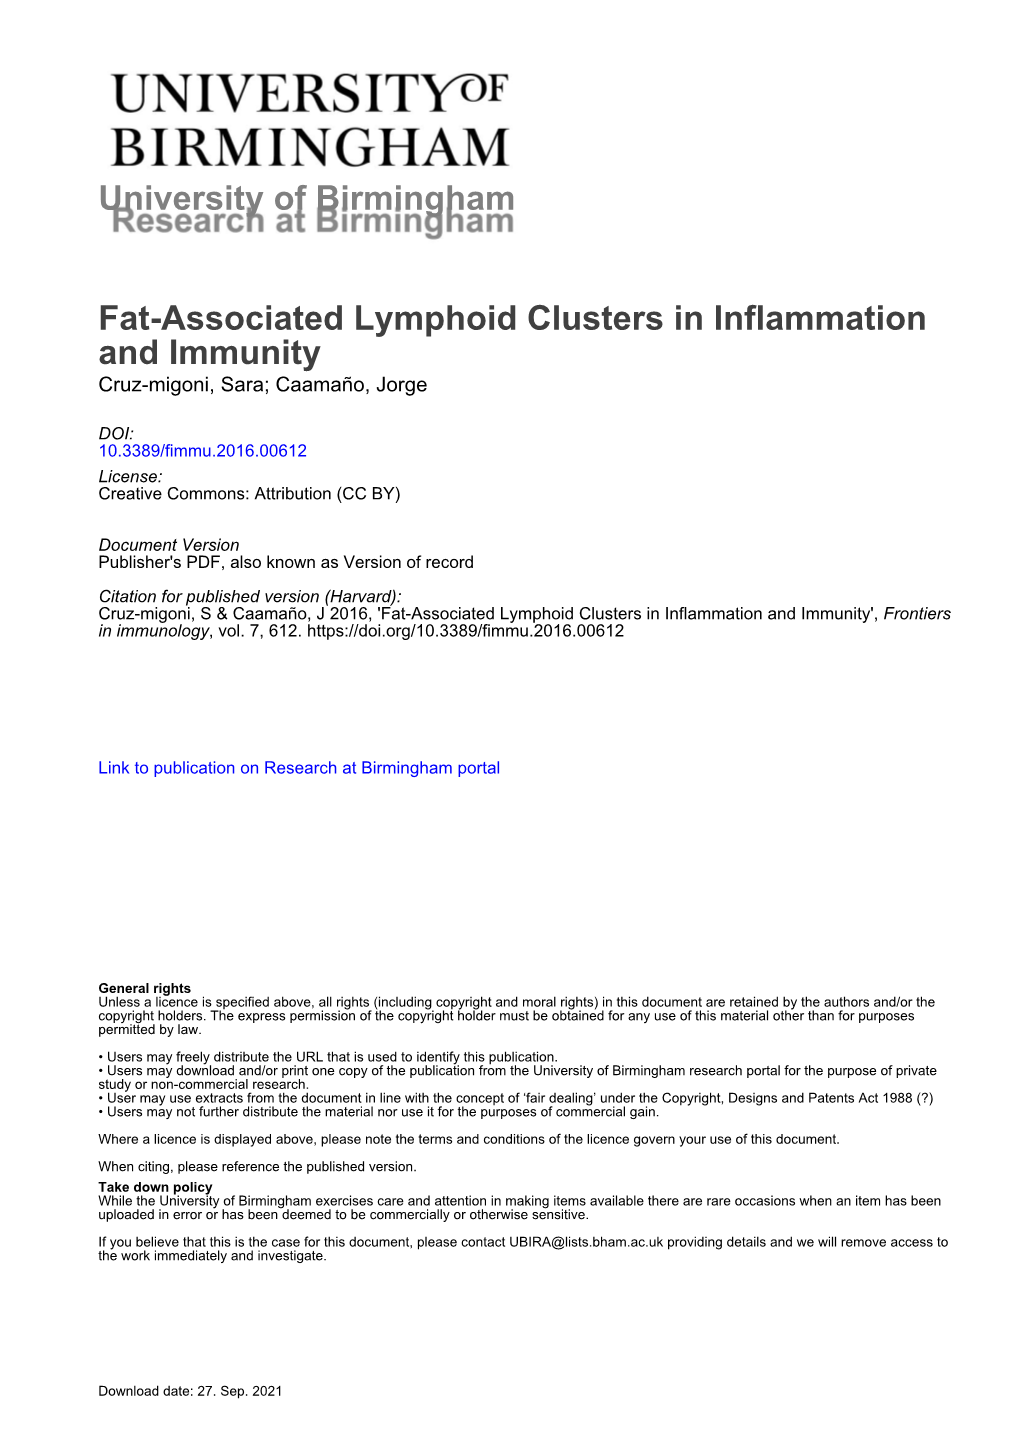 Fat-Associated Lymphoid Clusters in Inflammation and Immunity Cruz-Migoni, Sara; Caamaño, Jorge